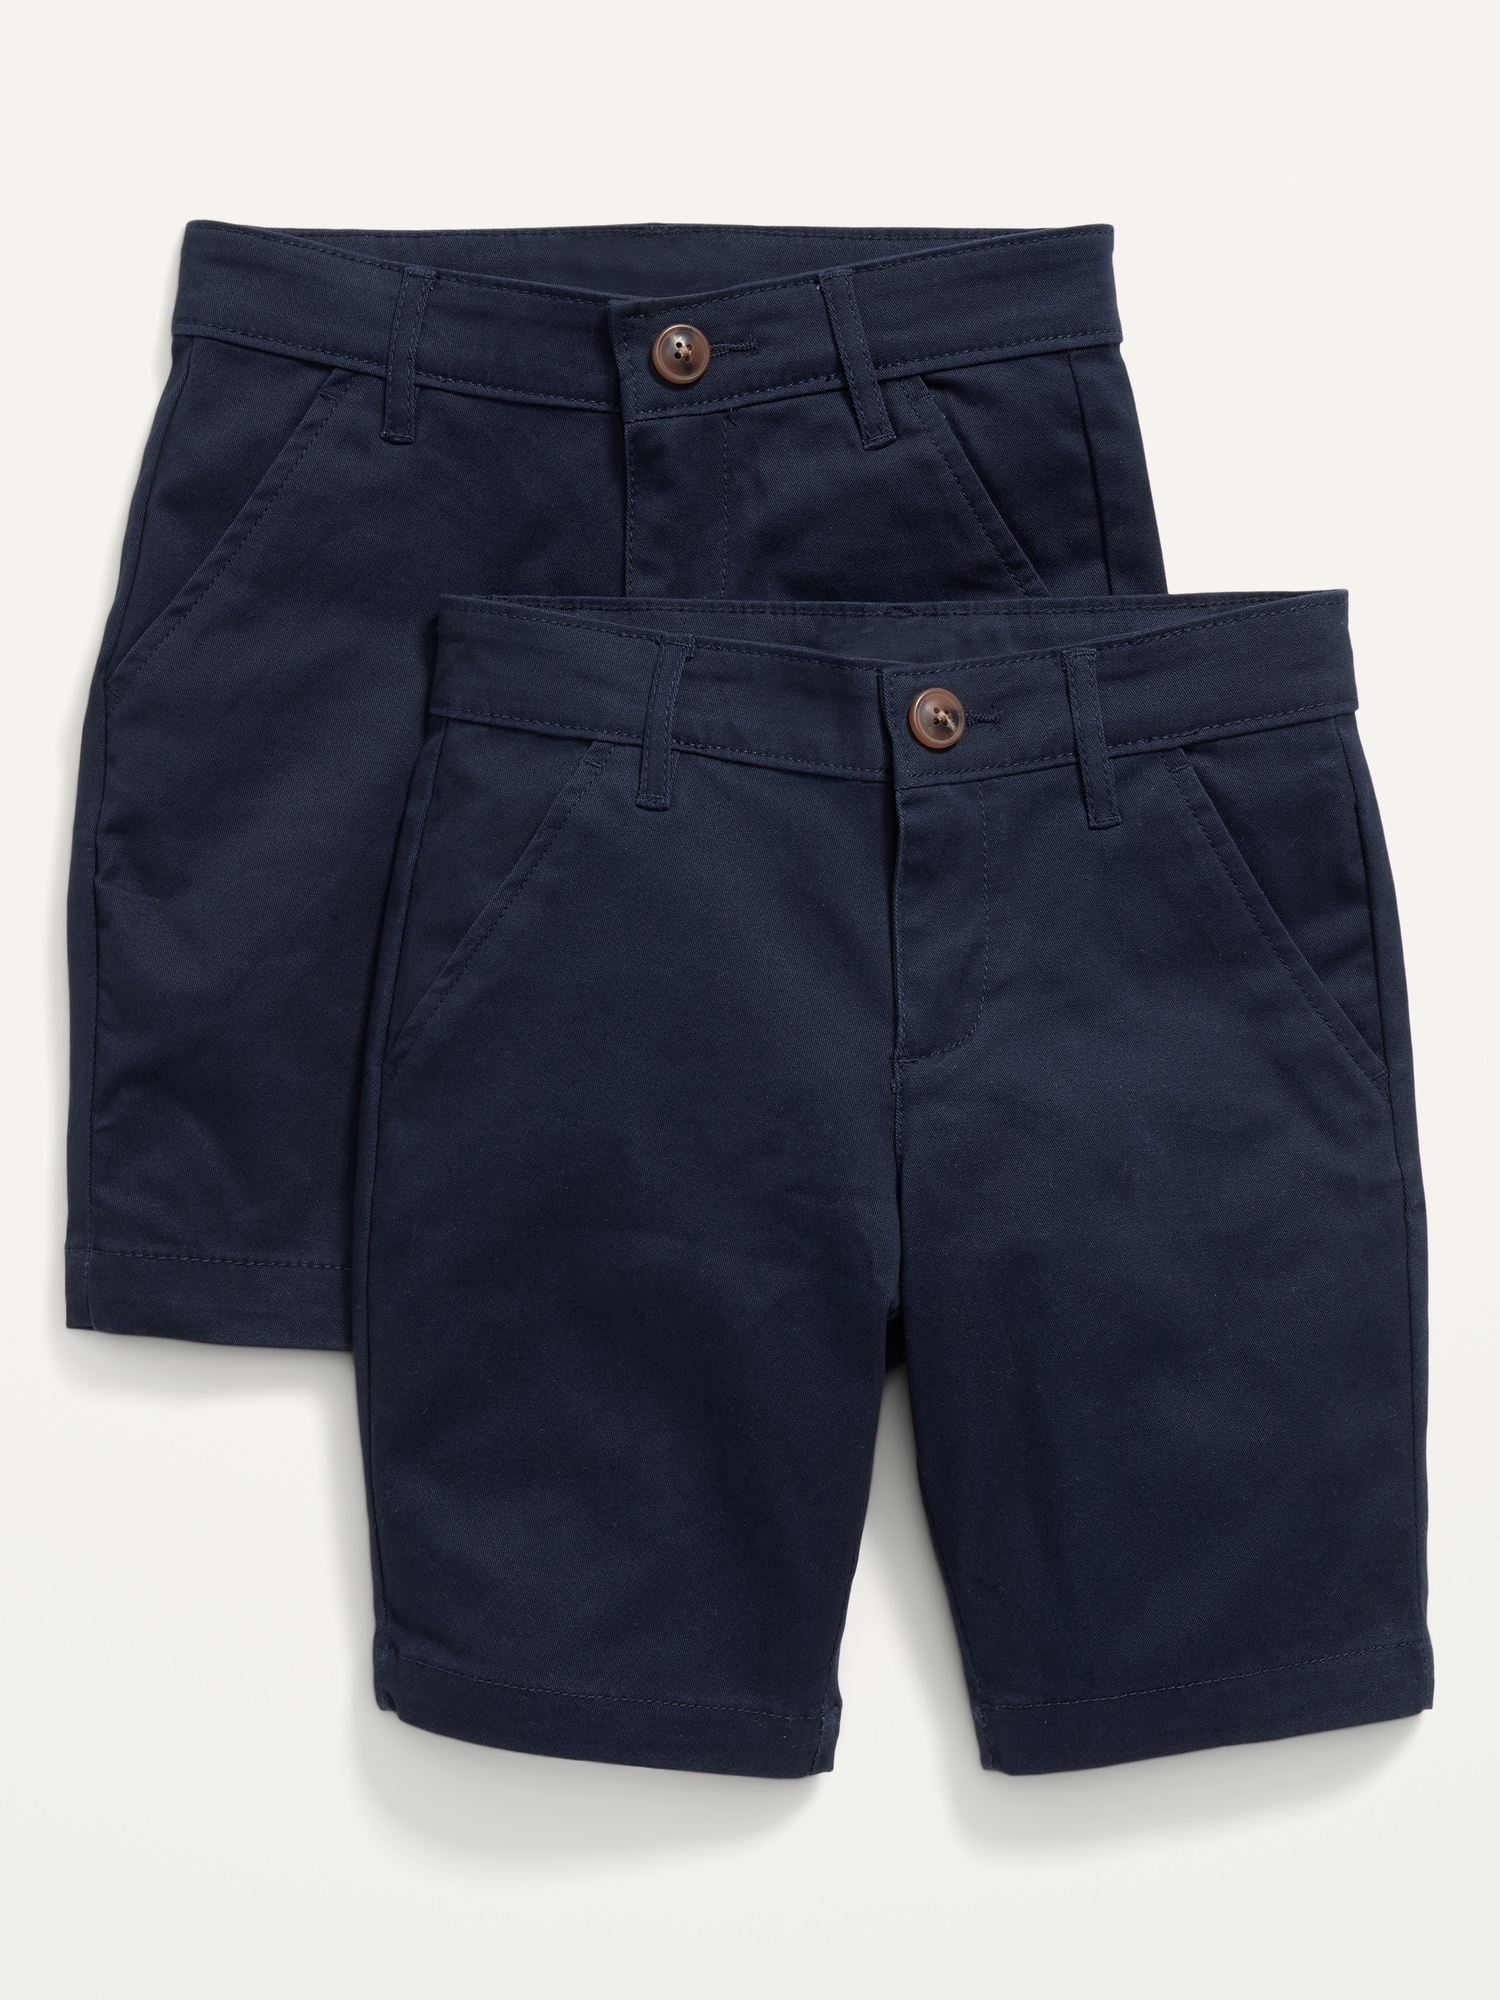 Old Navy School Uniform Twill Bermuda Shorts 2-Pack for Girls blue. 1